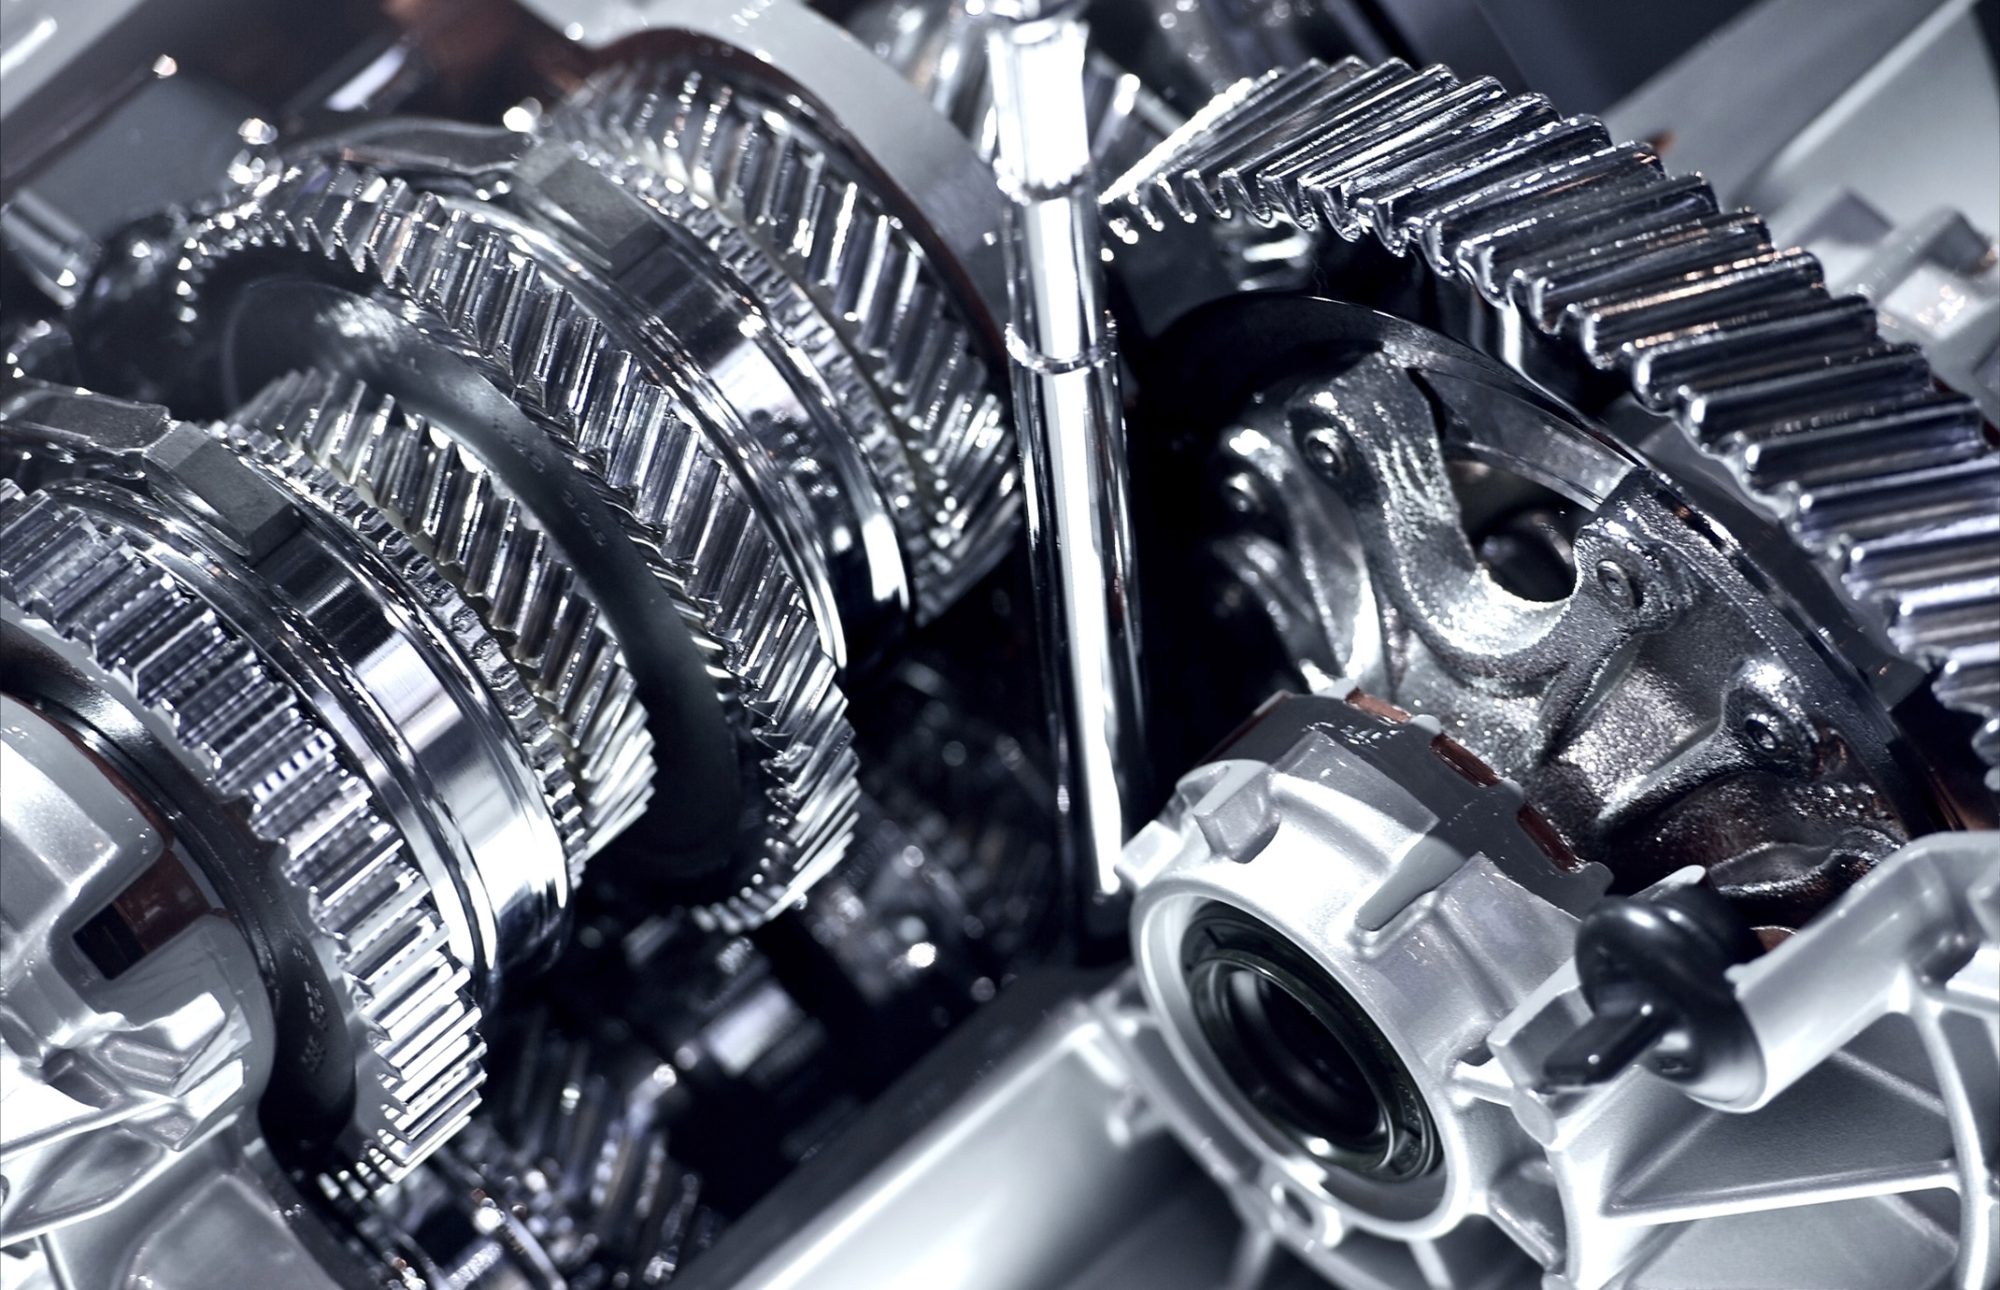 gearbox repairs & replacements in pudsey, leeds, bradford